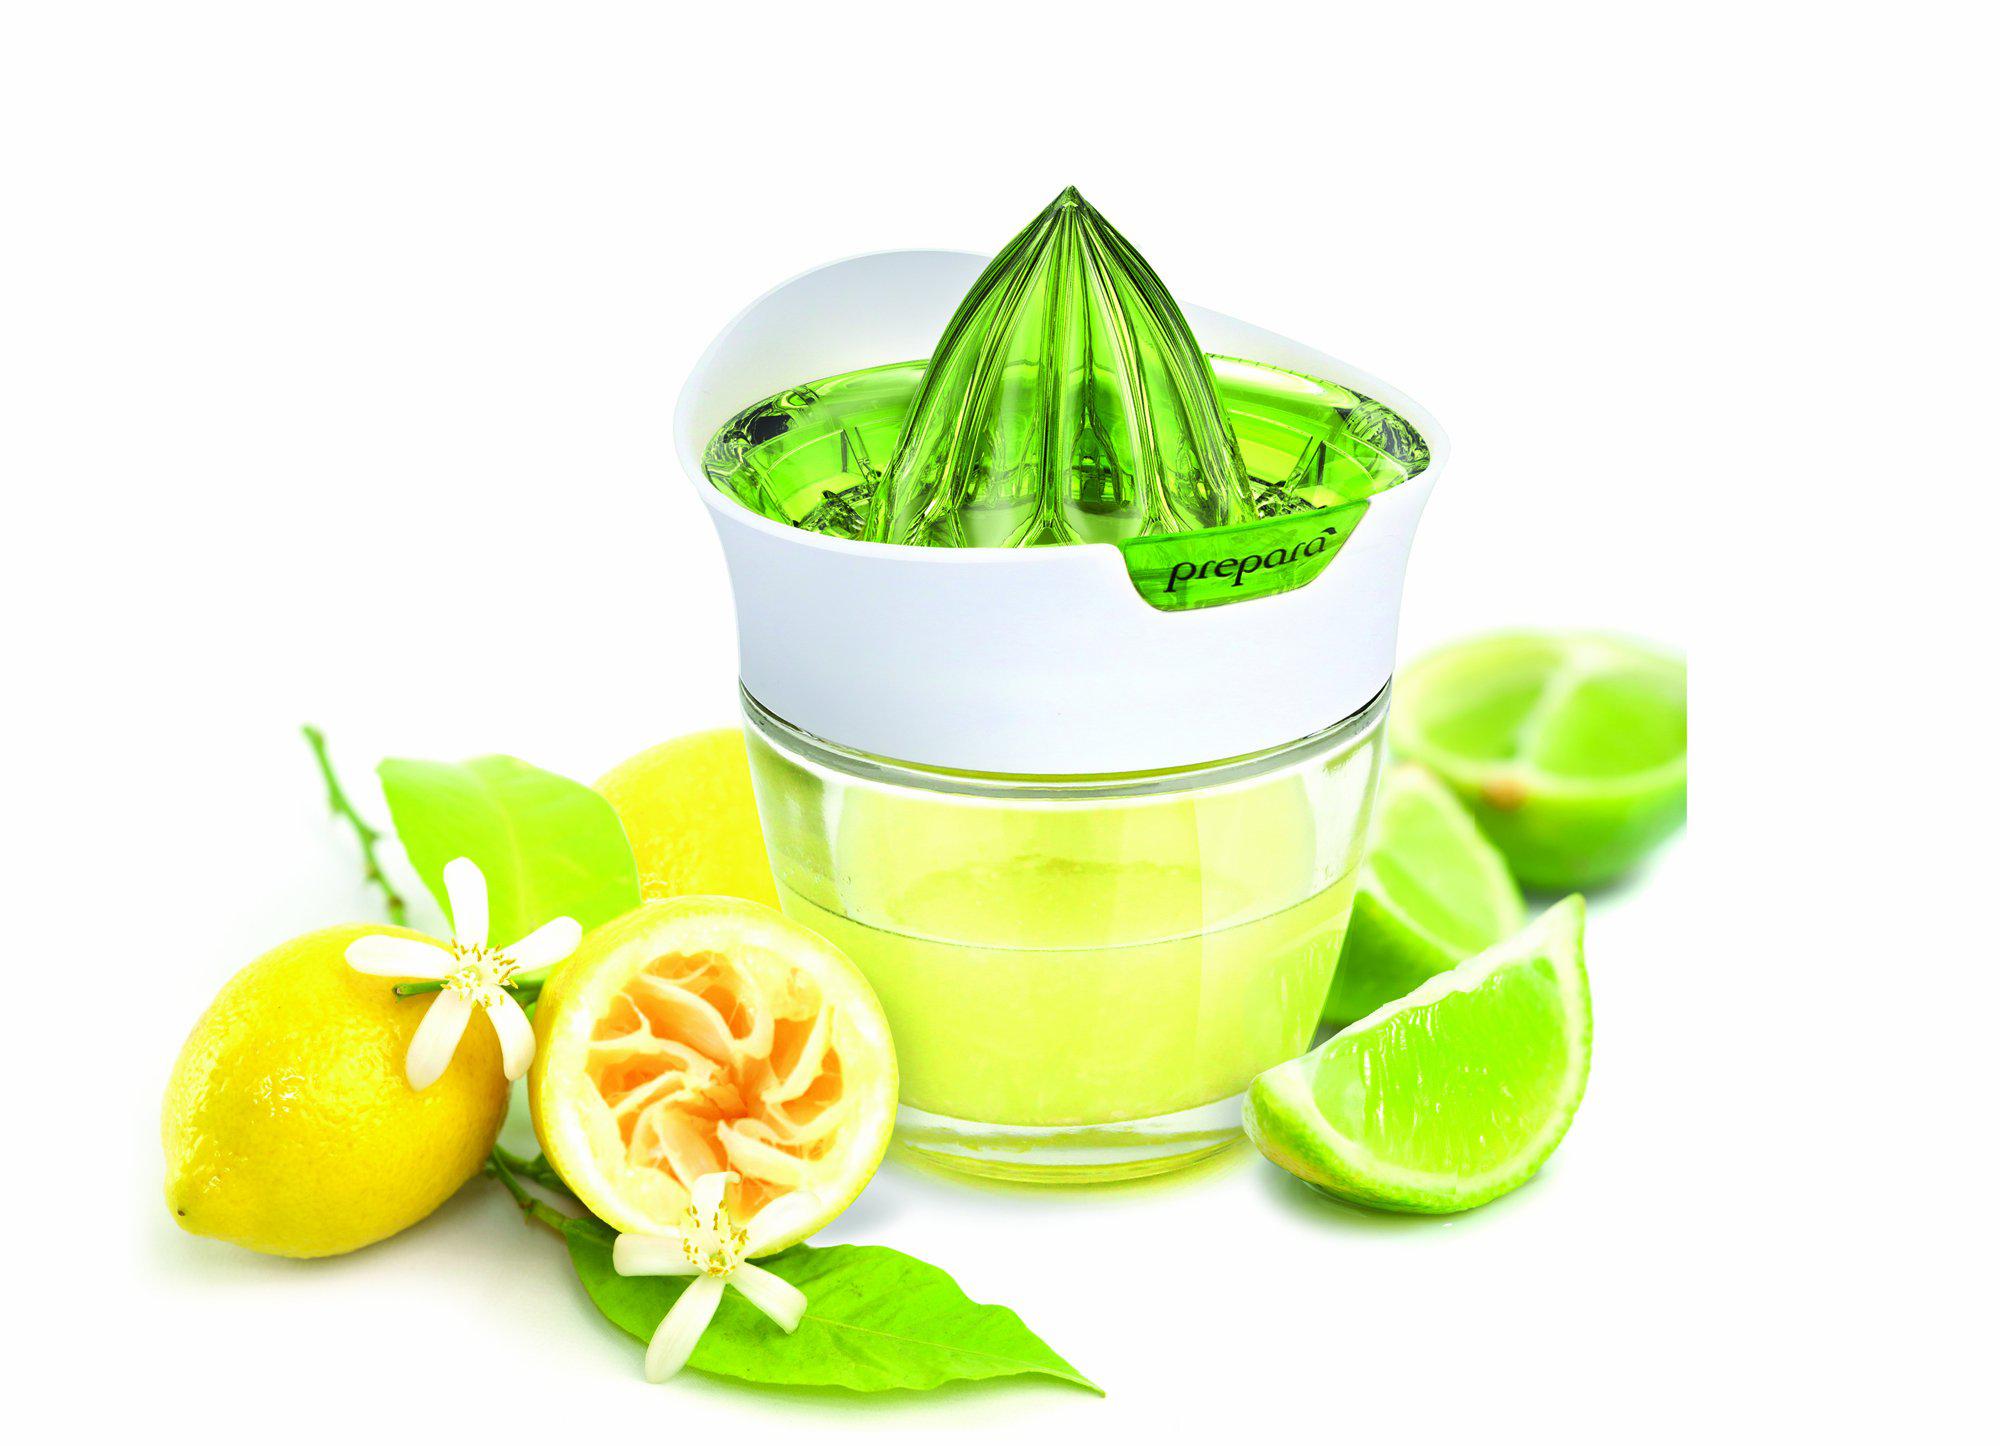 prepara chef's citrus juicer - green